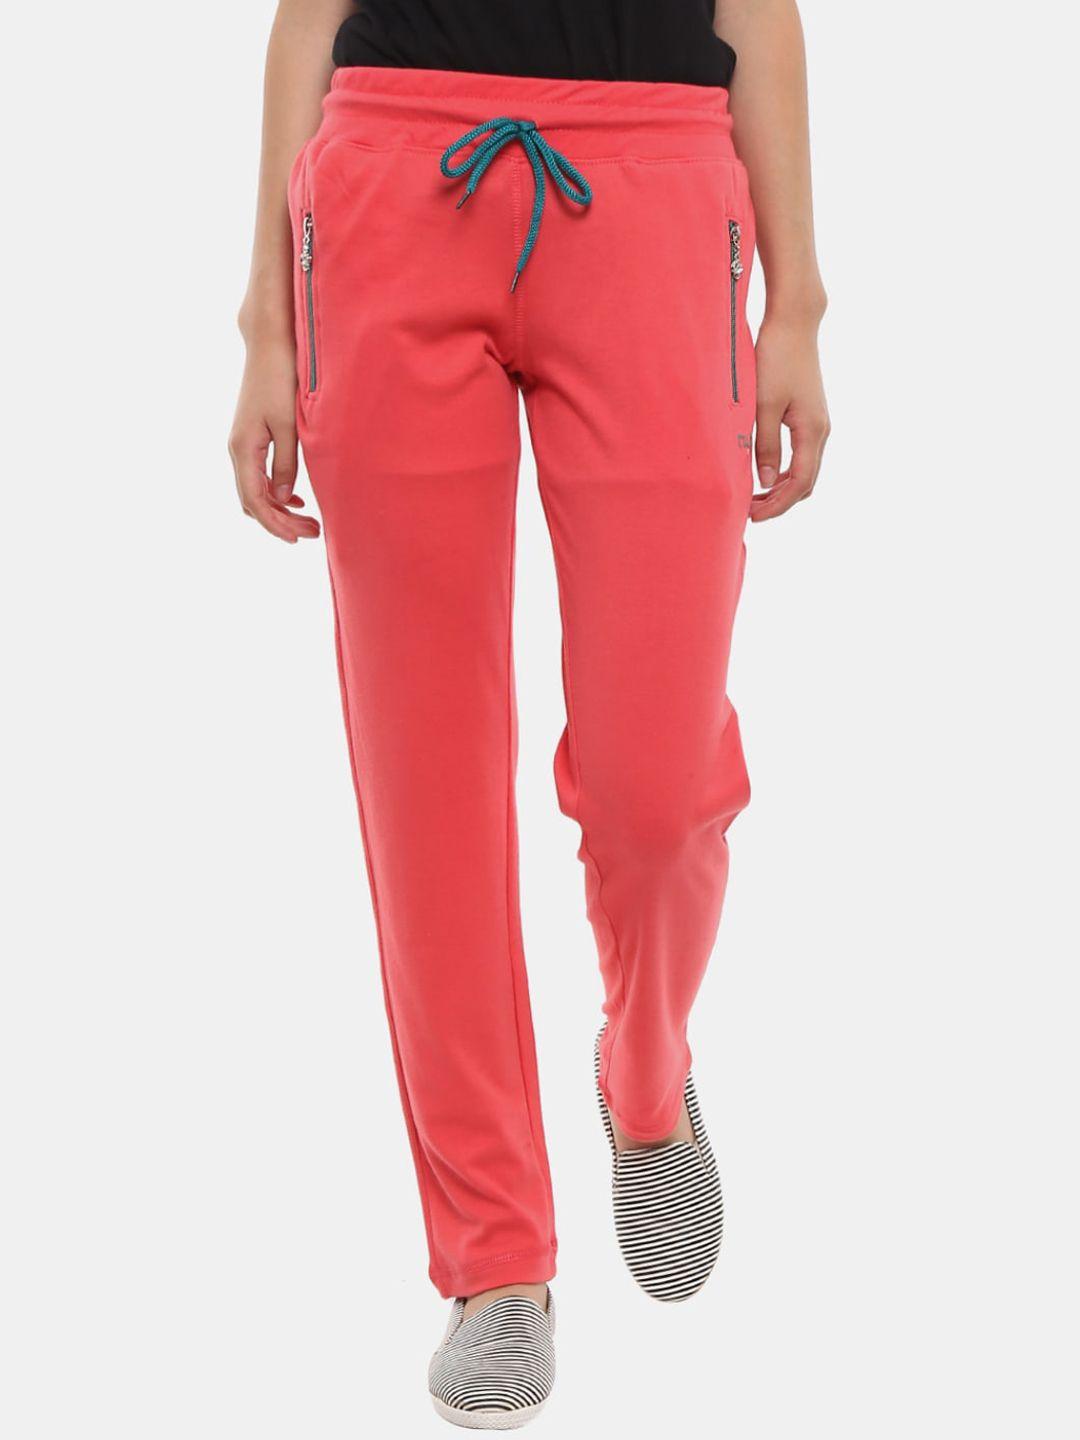 v-mart-coral-coloured-solid-cotton-track-pants